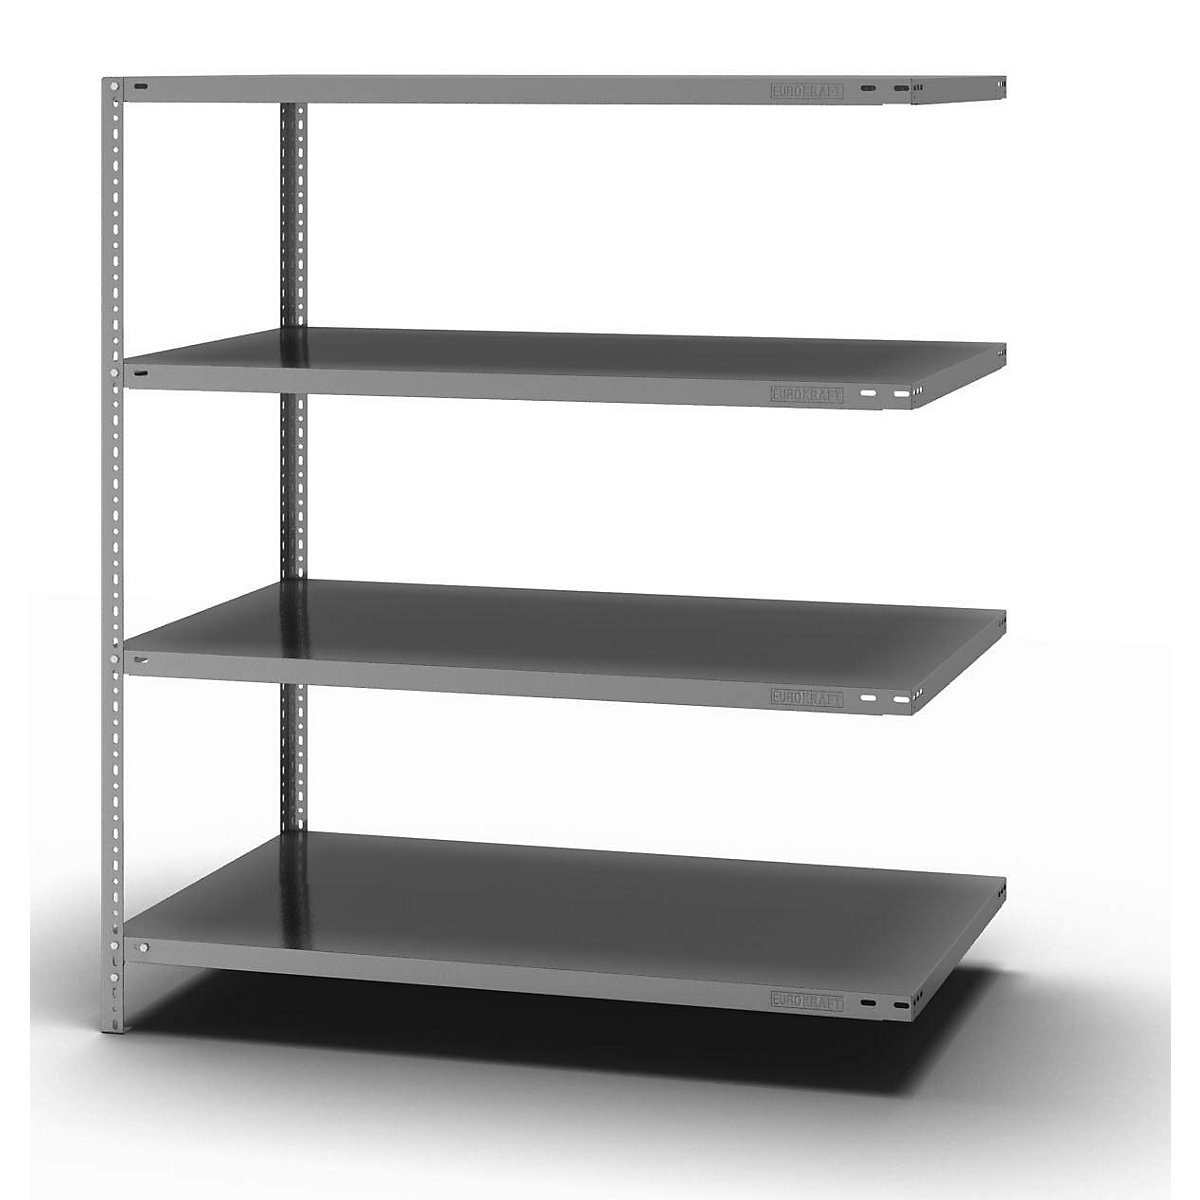 Bolt-together storage shelving, zinc plated, medium duty – eurokraft pro, shelf unit height 1500 mm, shelf width 1300 mm, depth 800 mm, extension shelf unit-5